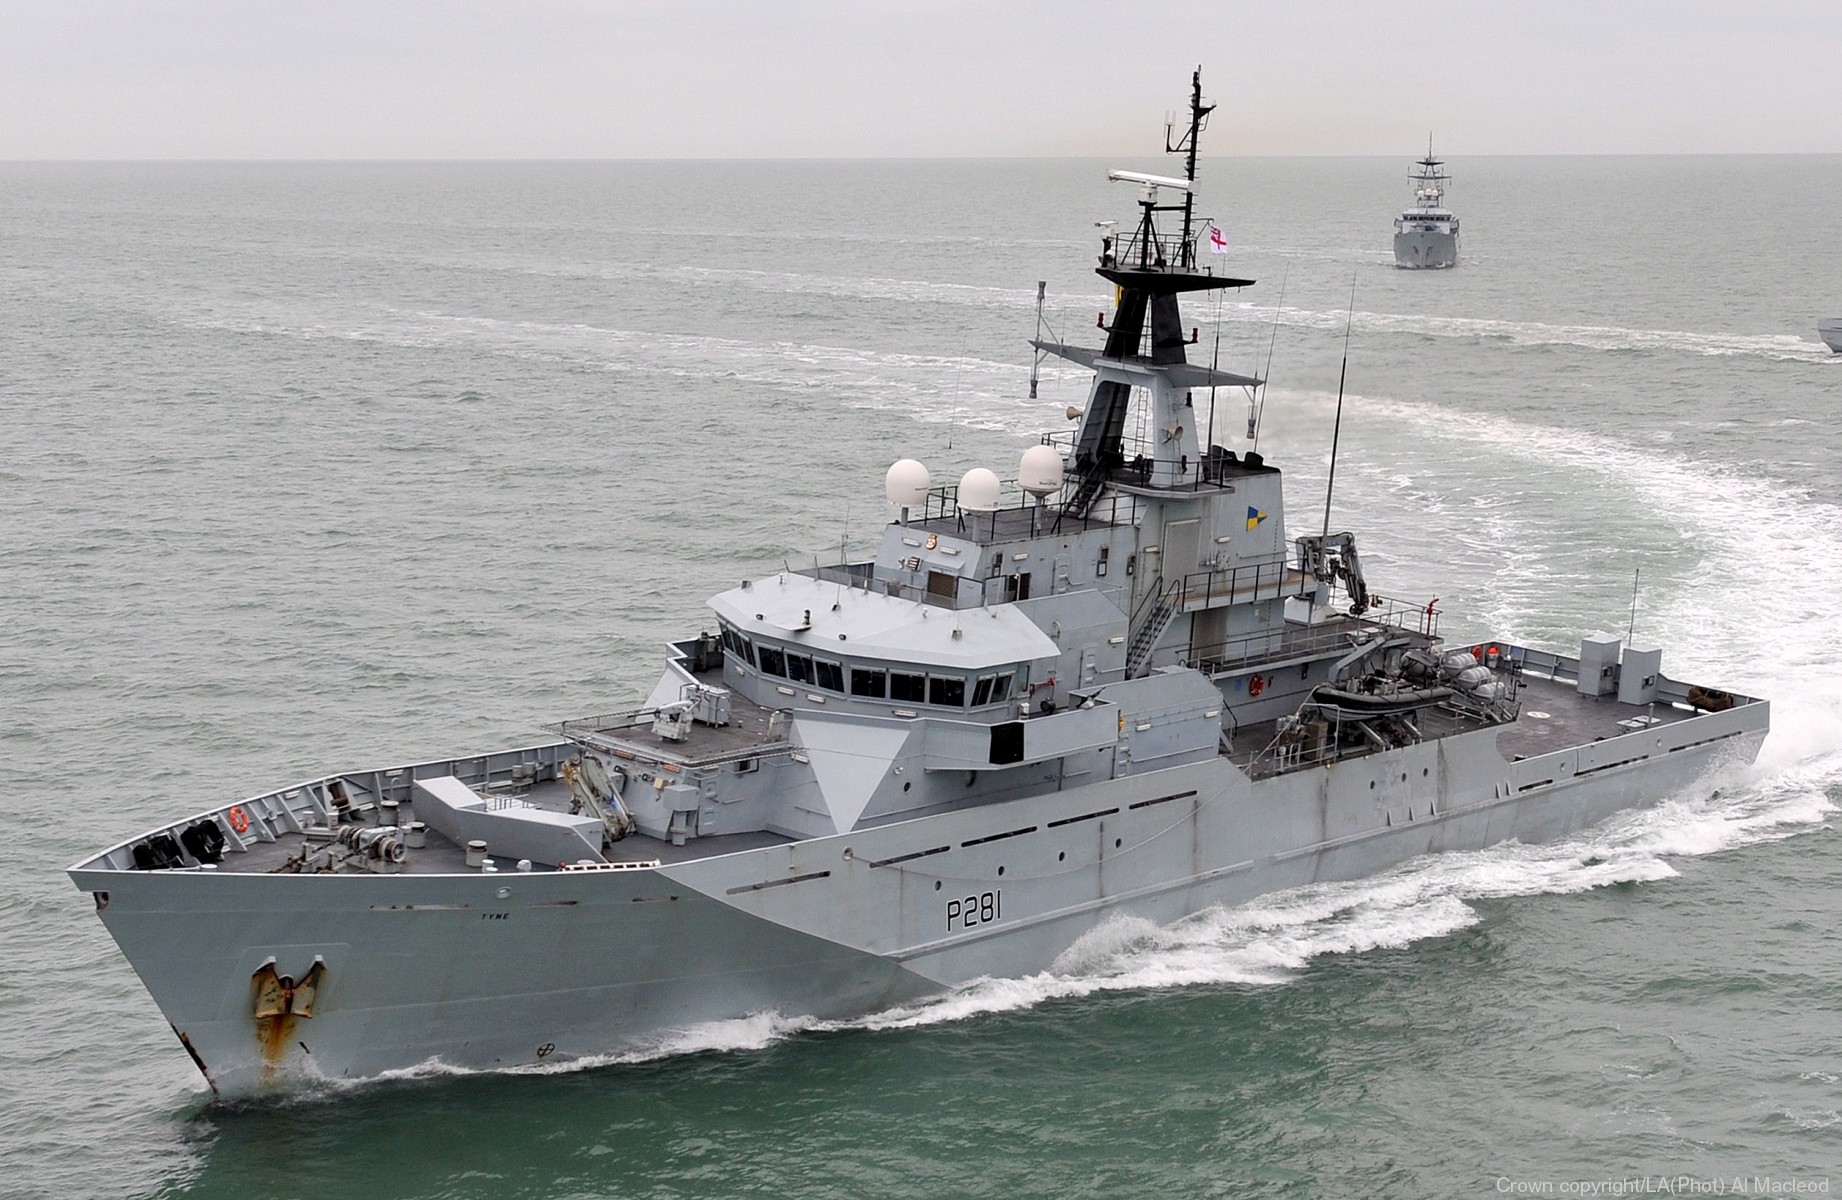 p281 hms tyne river class offshore patrol vessel opv royal navy 02